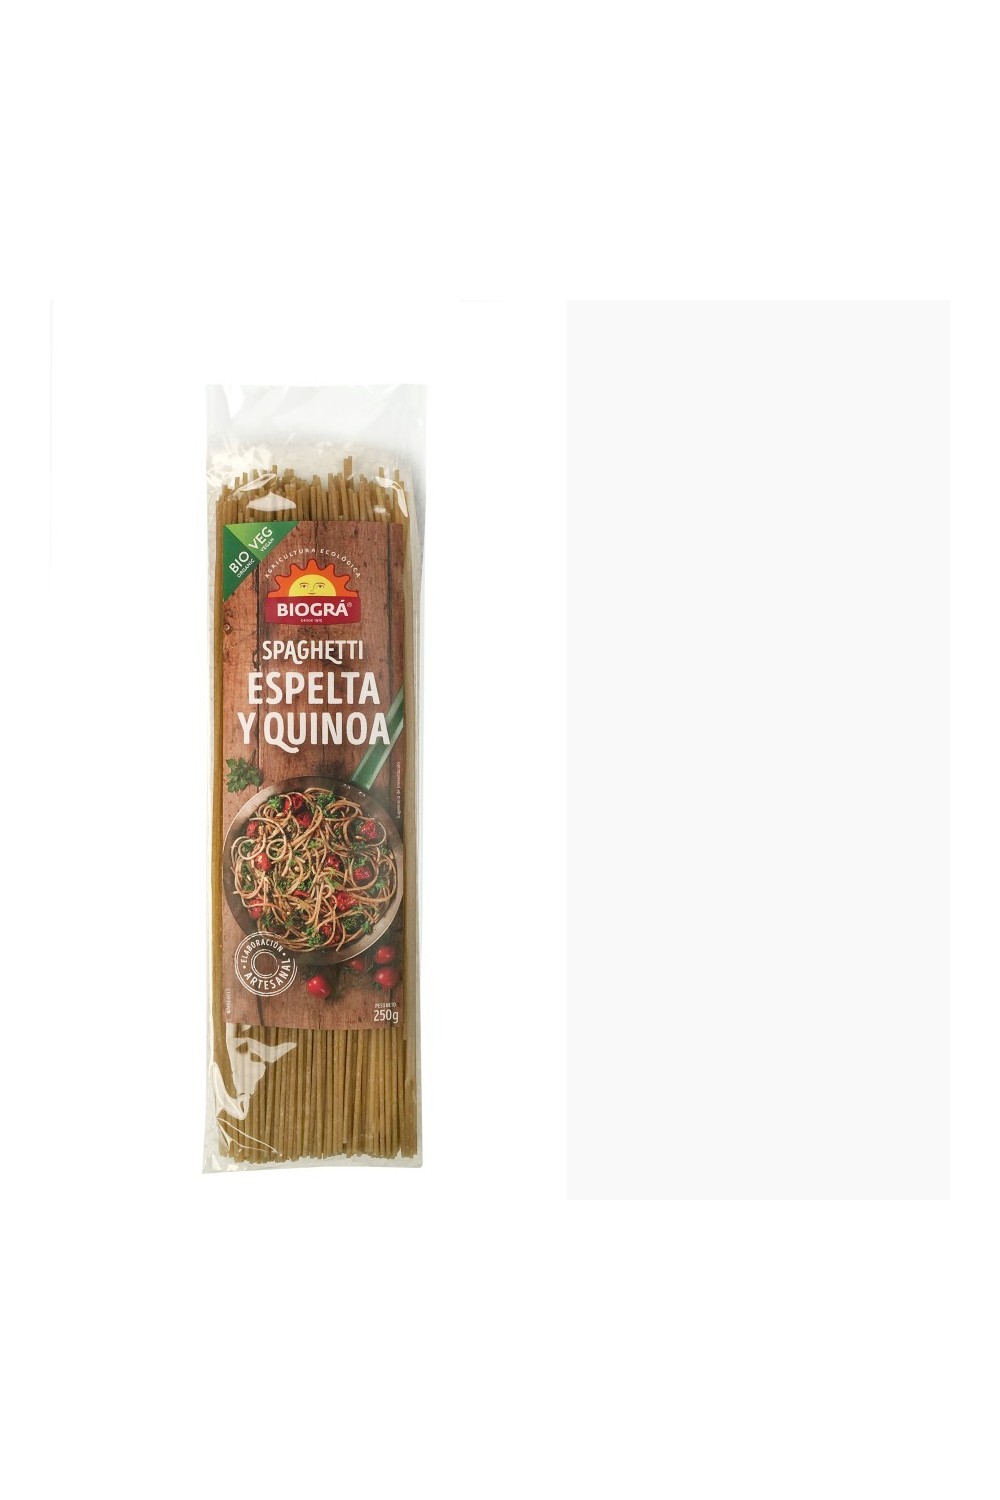 BIOGRÁ - Biográ Spaguetti De Espelta Con Quinoa Biogra Bio